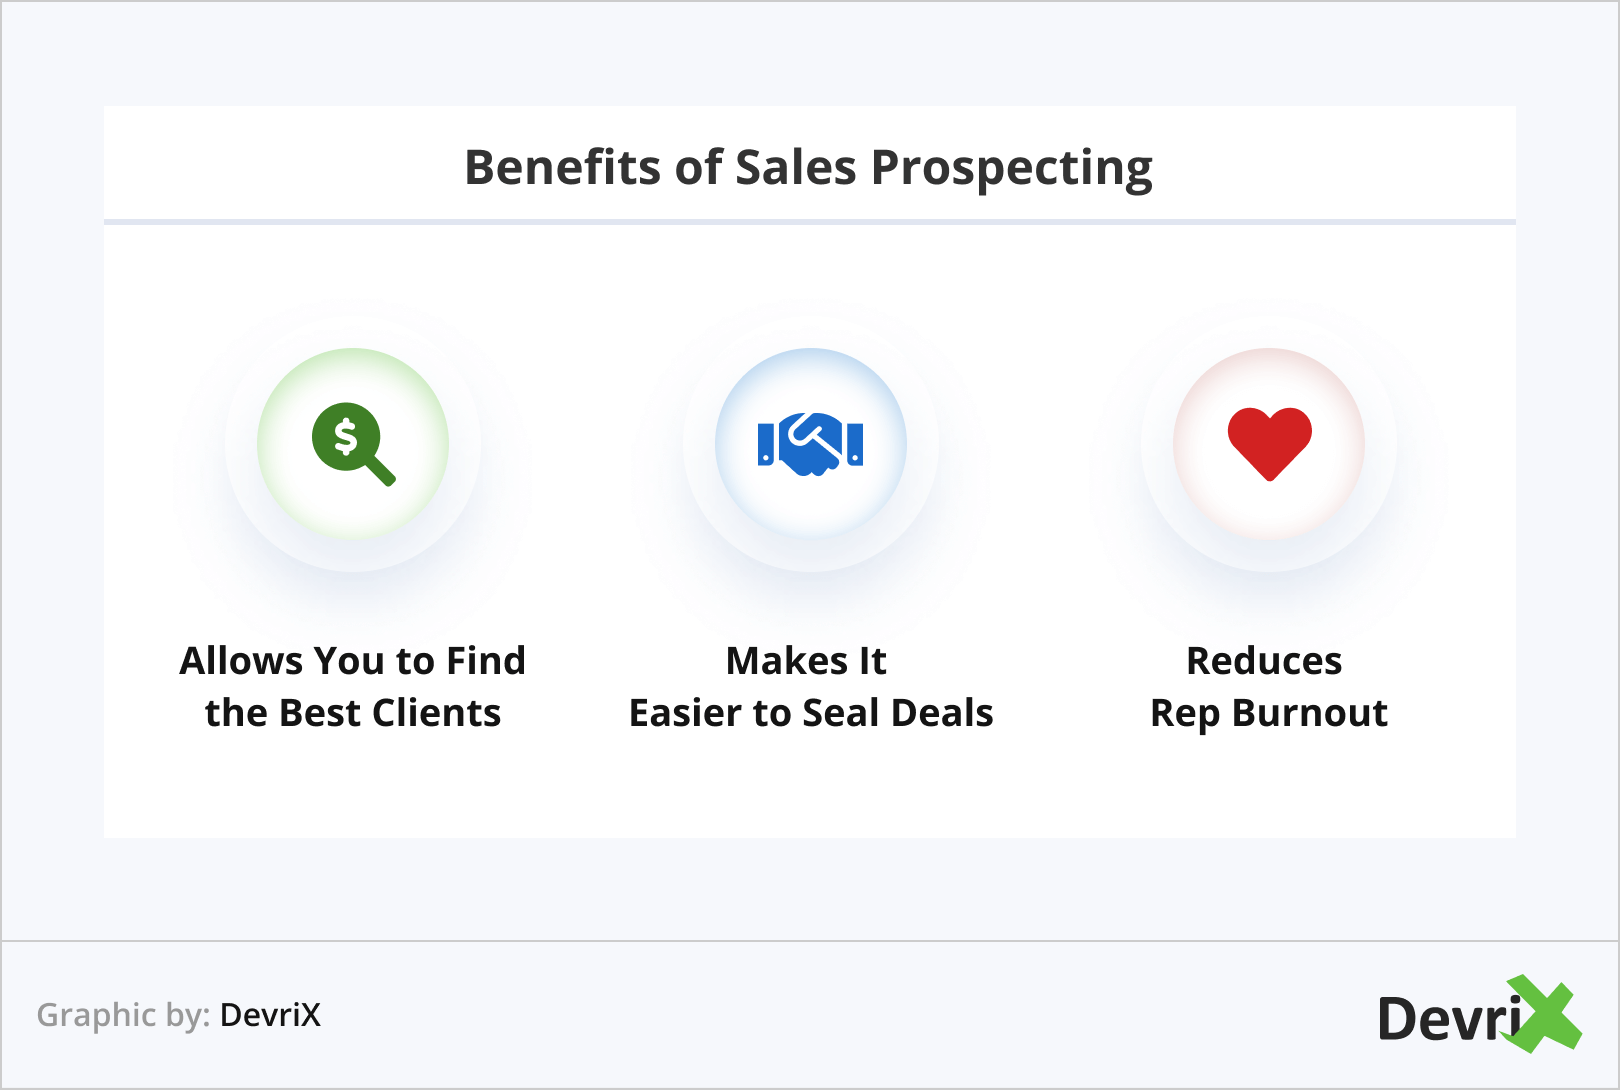 Benefits of Sales Prospecting